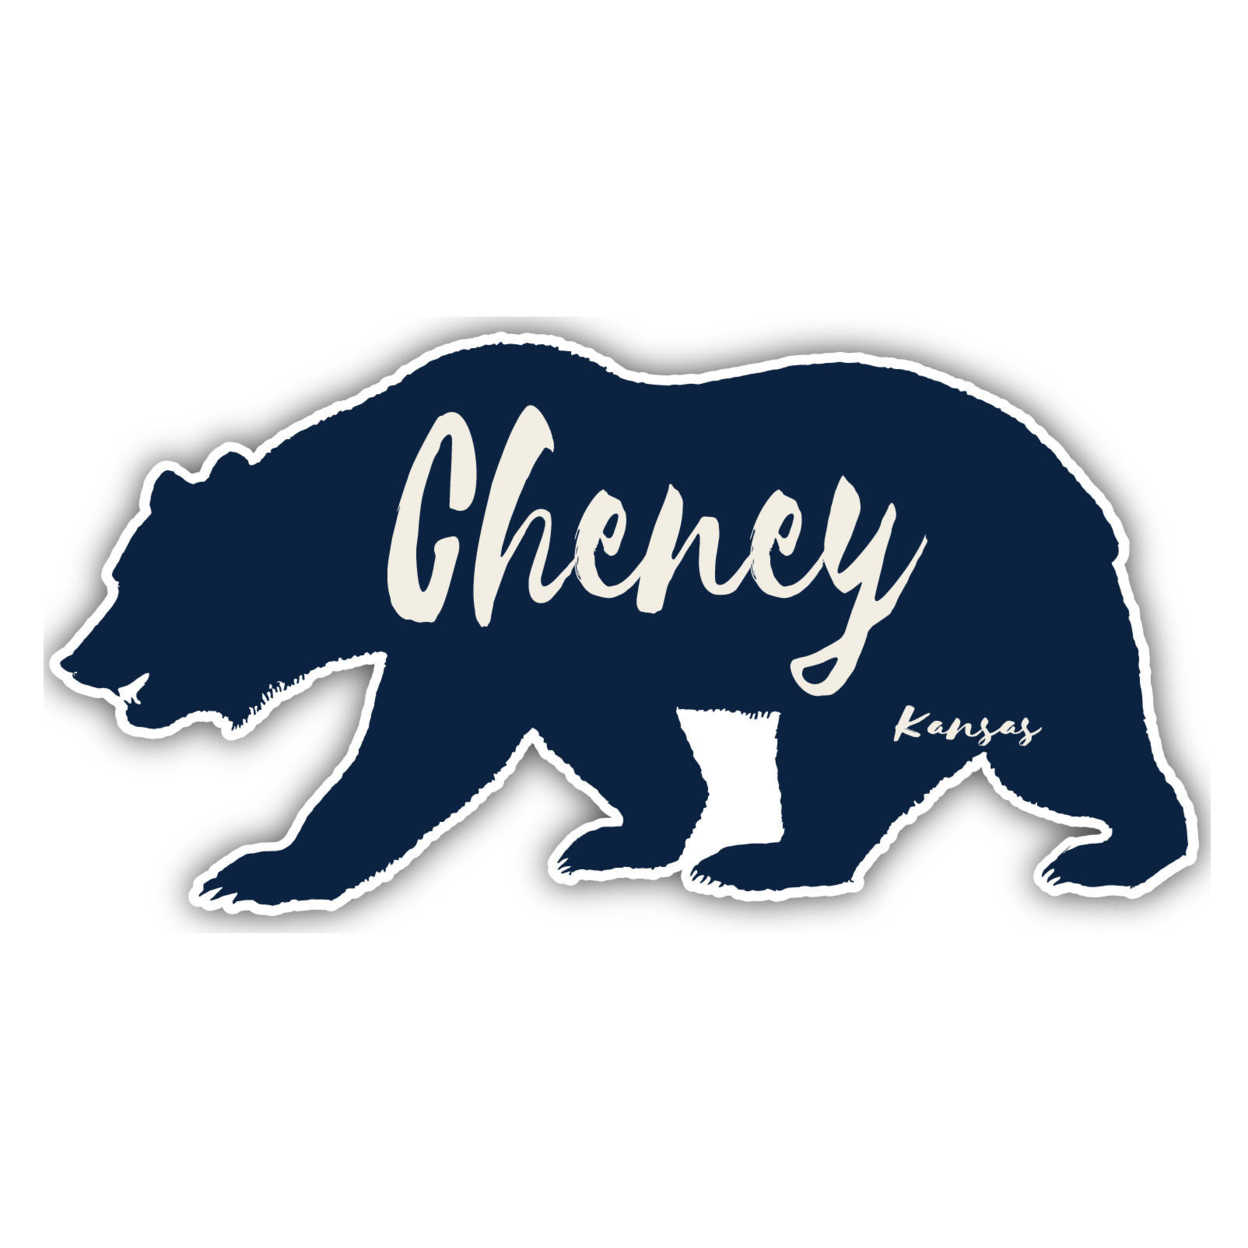 Cheney Kansas Souvenir Decorative Stickers (Choose Theme And Size) - 4-Pack, 6-Inch, Bear